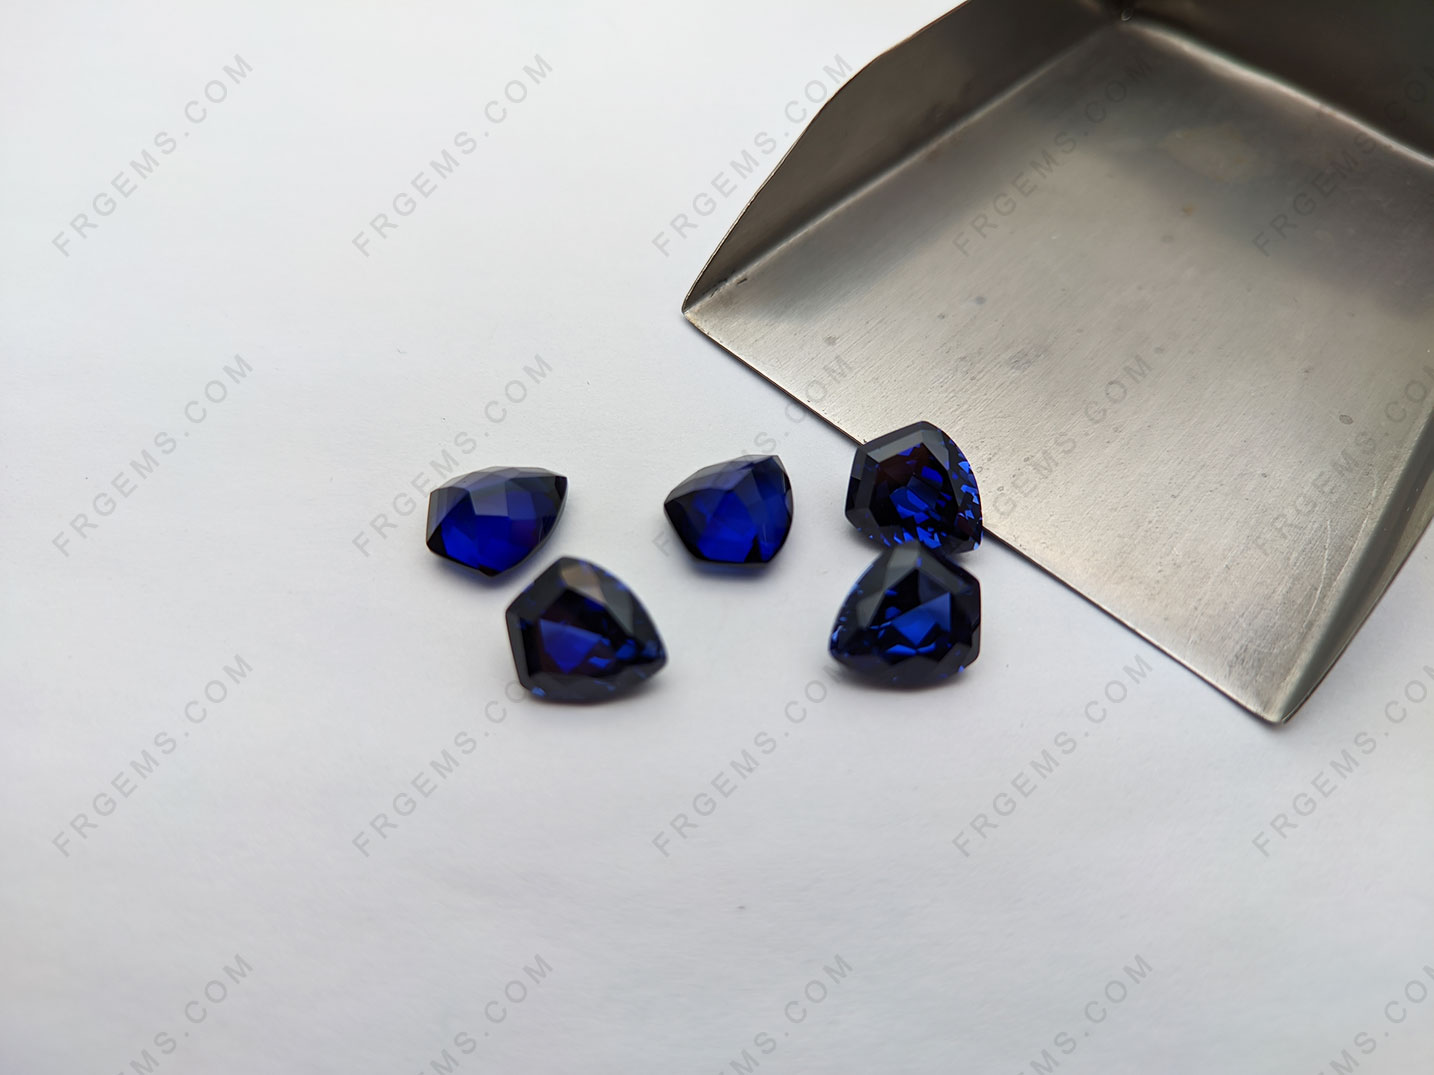 Corundum Synthetic Sapphire Blue 34# Medium color Sheild Shaped faceted Cut 12x10mm stones